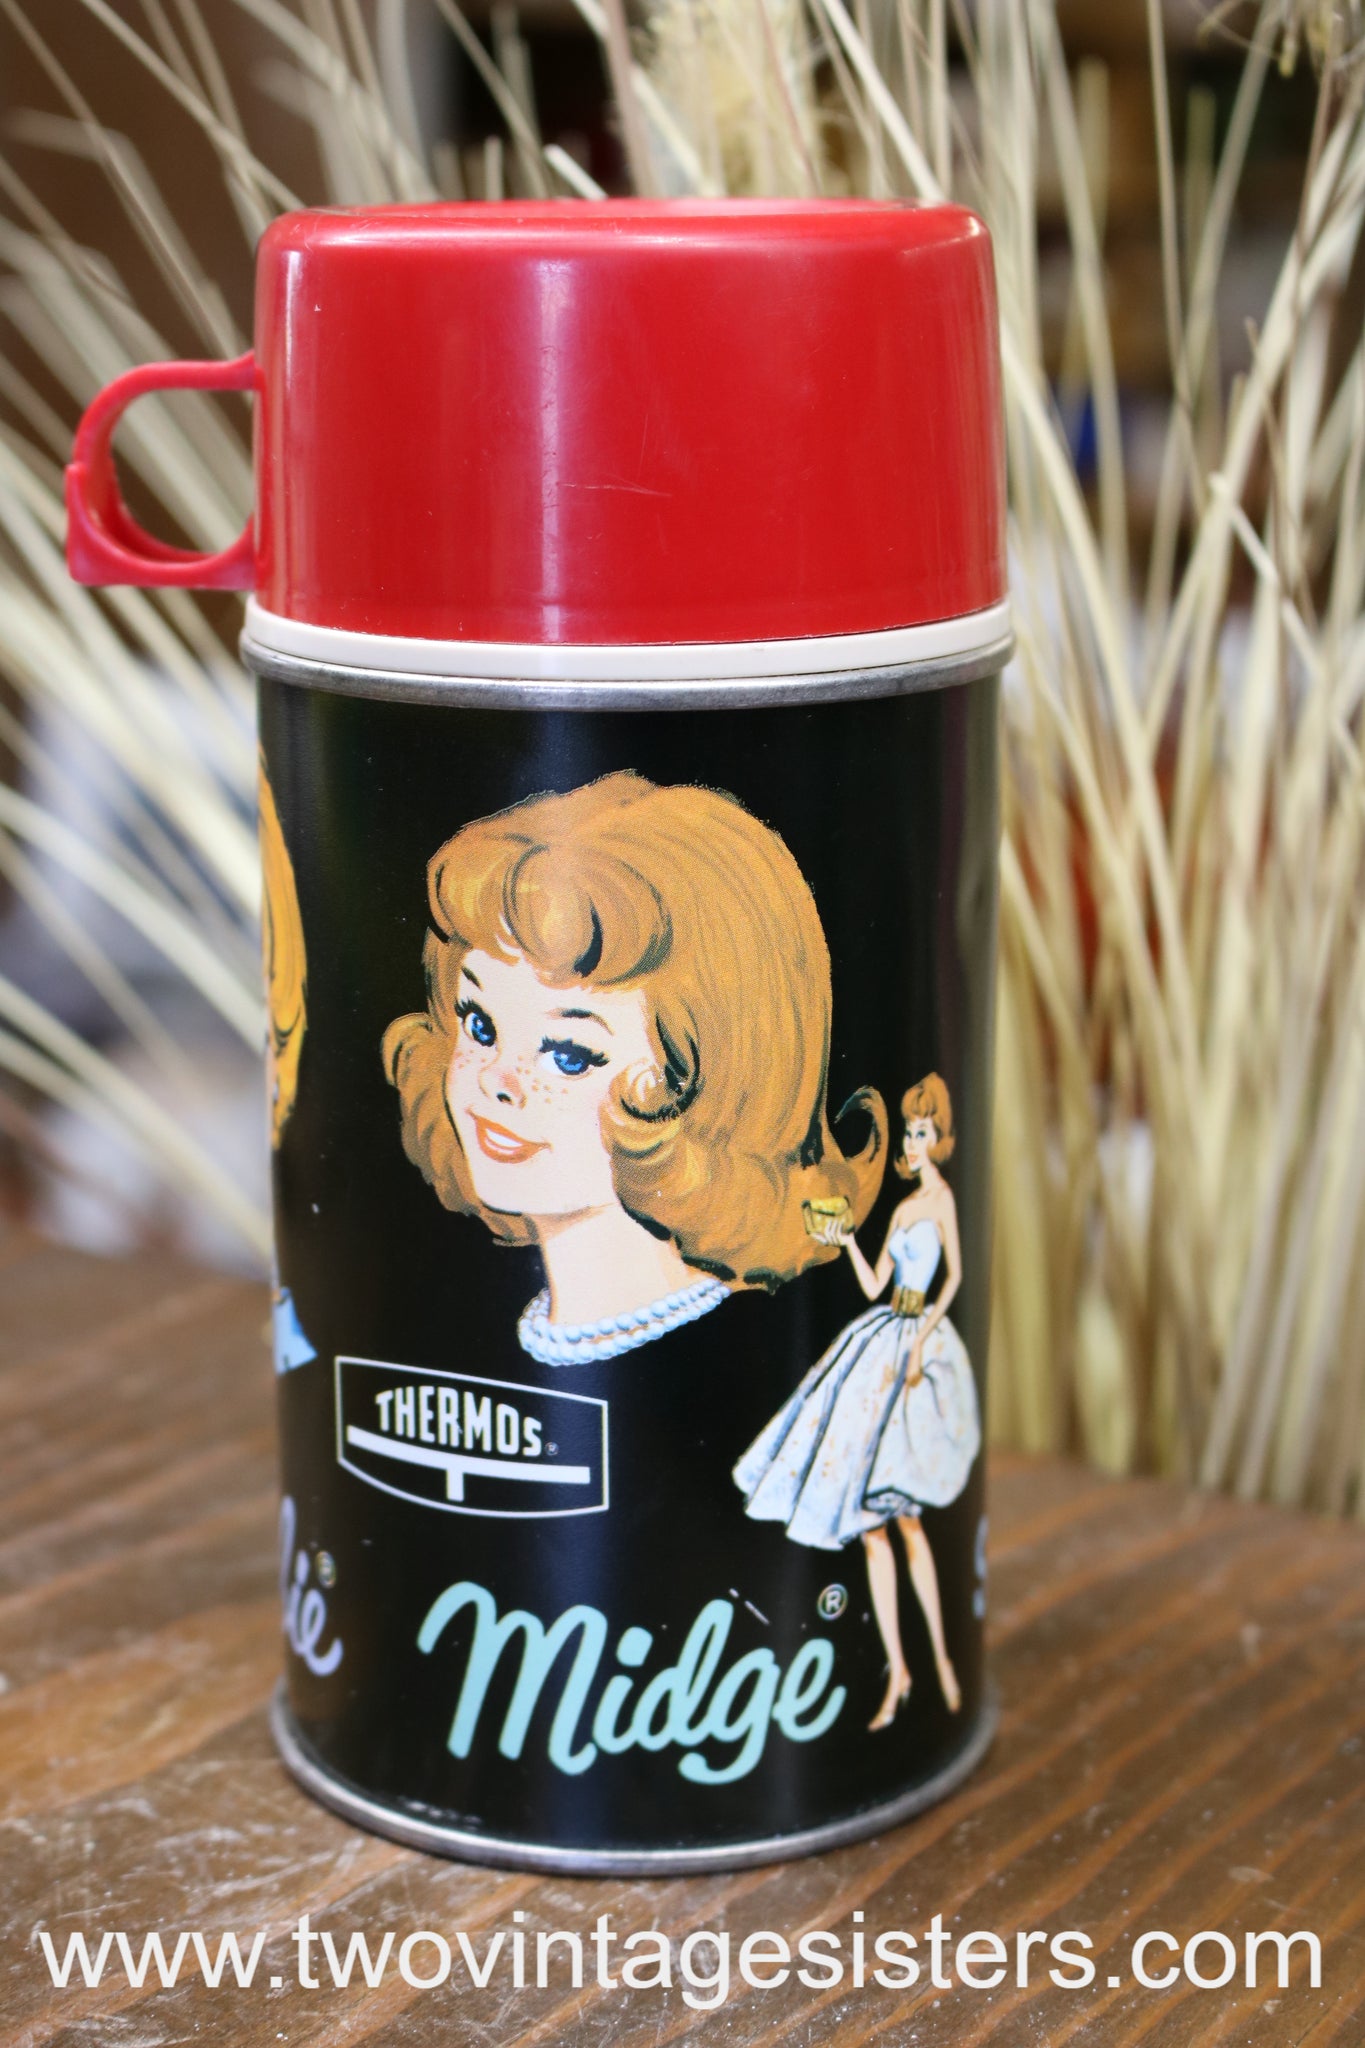 1965 Barbie Midge Skipper Black Thermos - Vintage Collectible